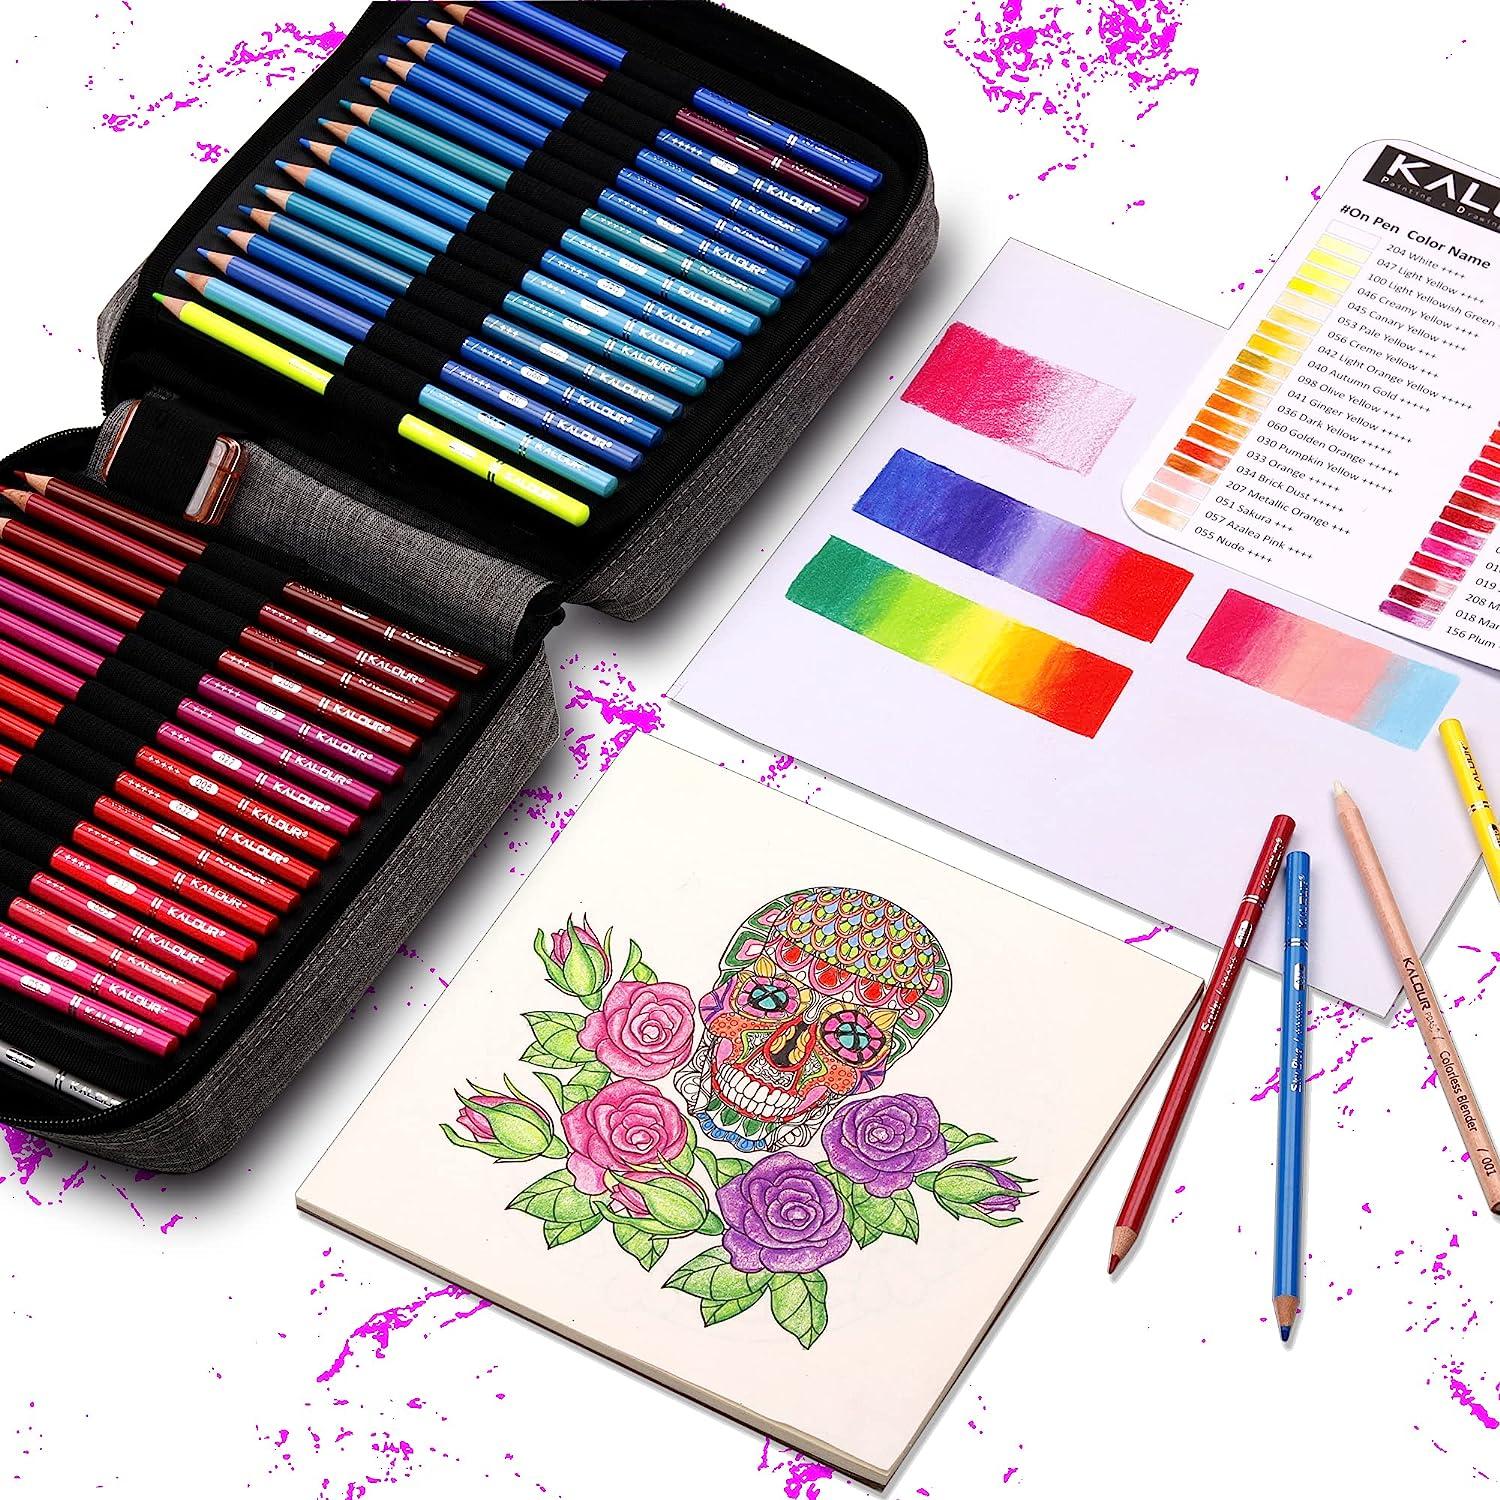 208 Pcs Art Set Kids Childrens Colouring Drawing Painting Arts & Crafts  Case UK